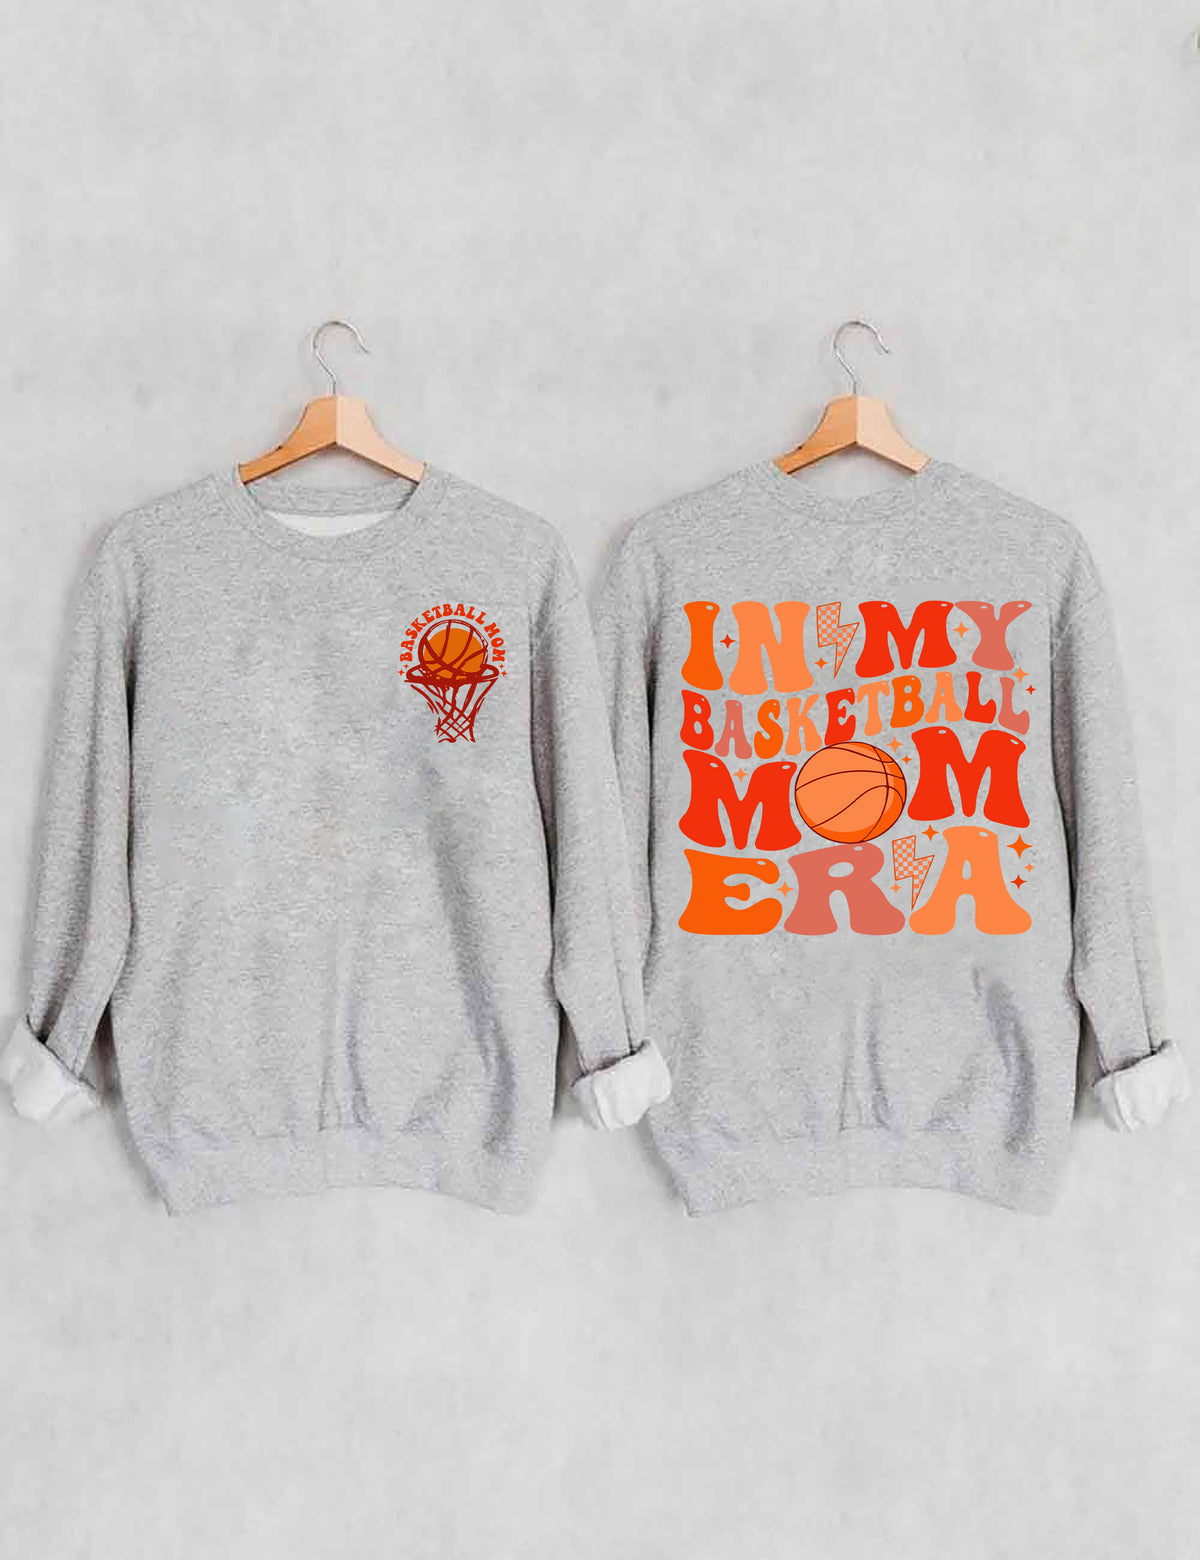 In meinem Basketball-Mama-Ära-Sweatshirt 